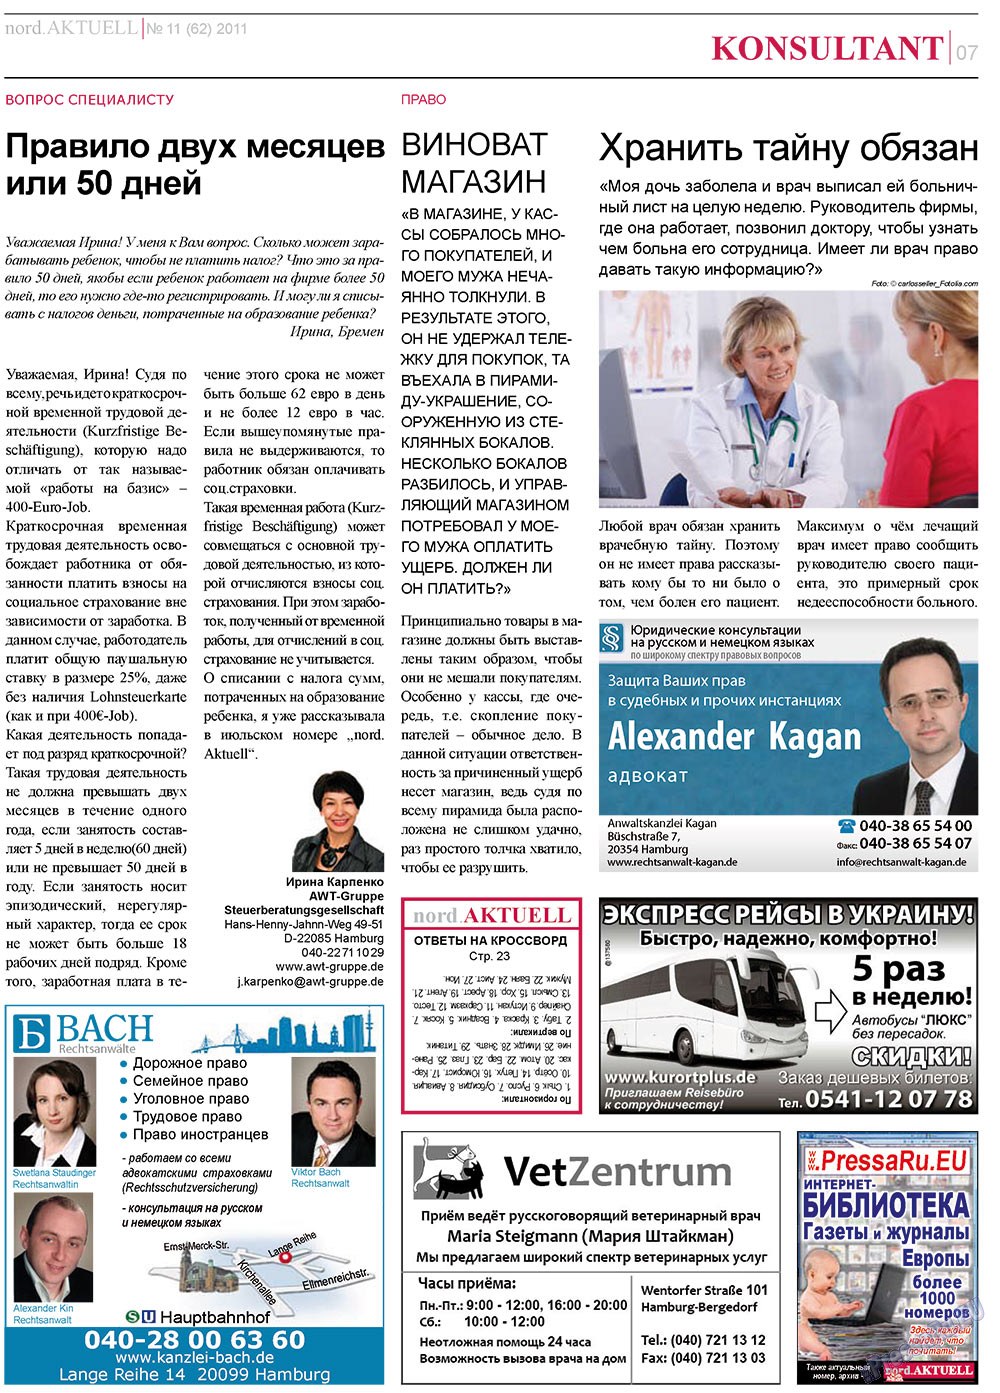 nord.Aktuell, газета. 2011 №11 стр.7